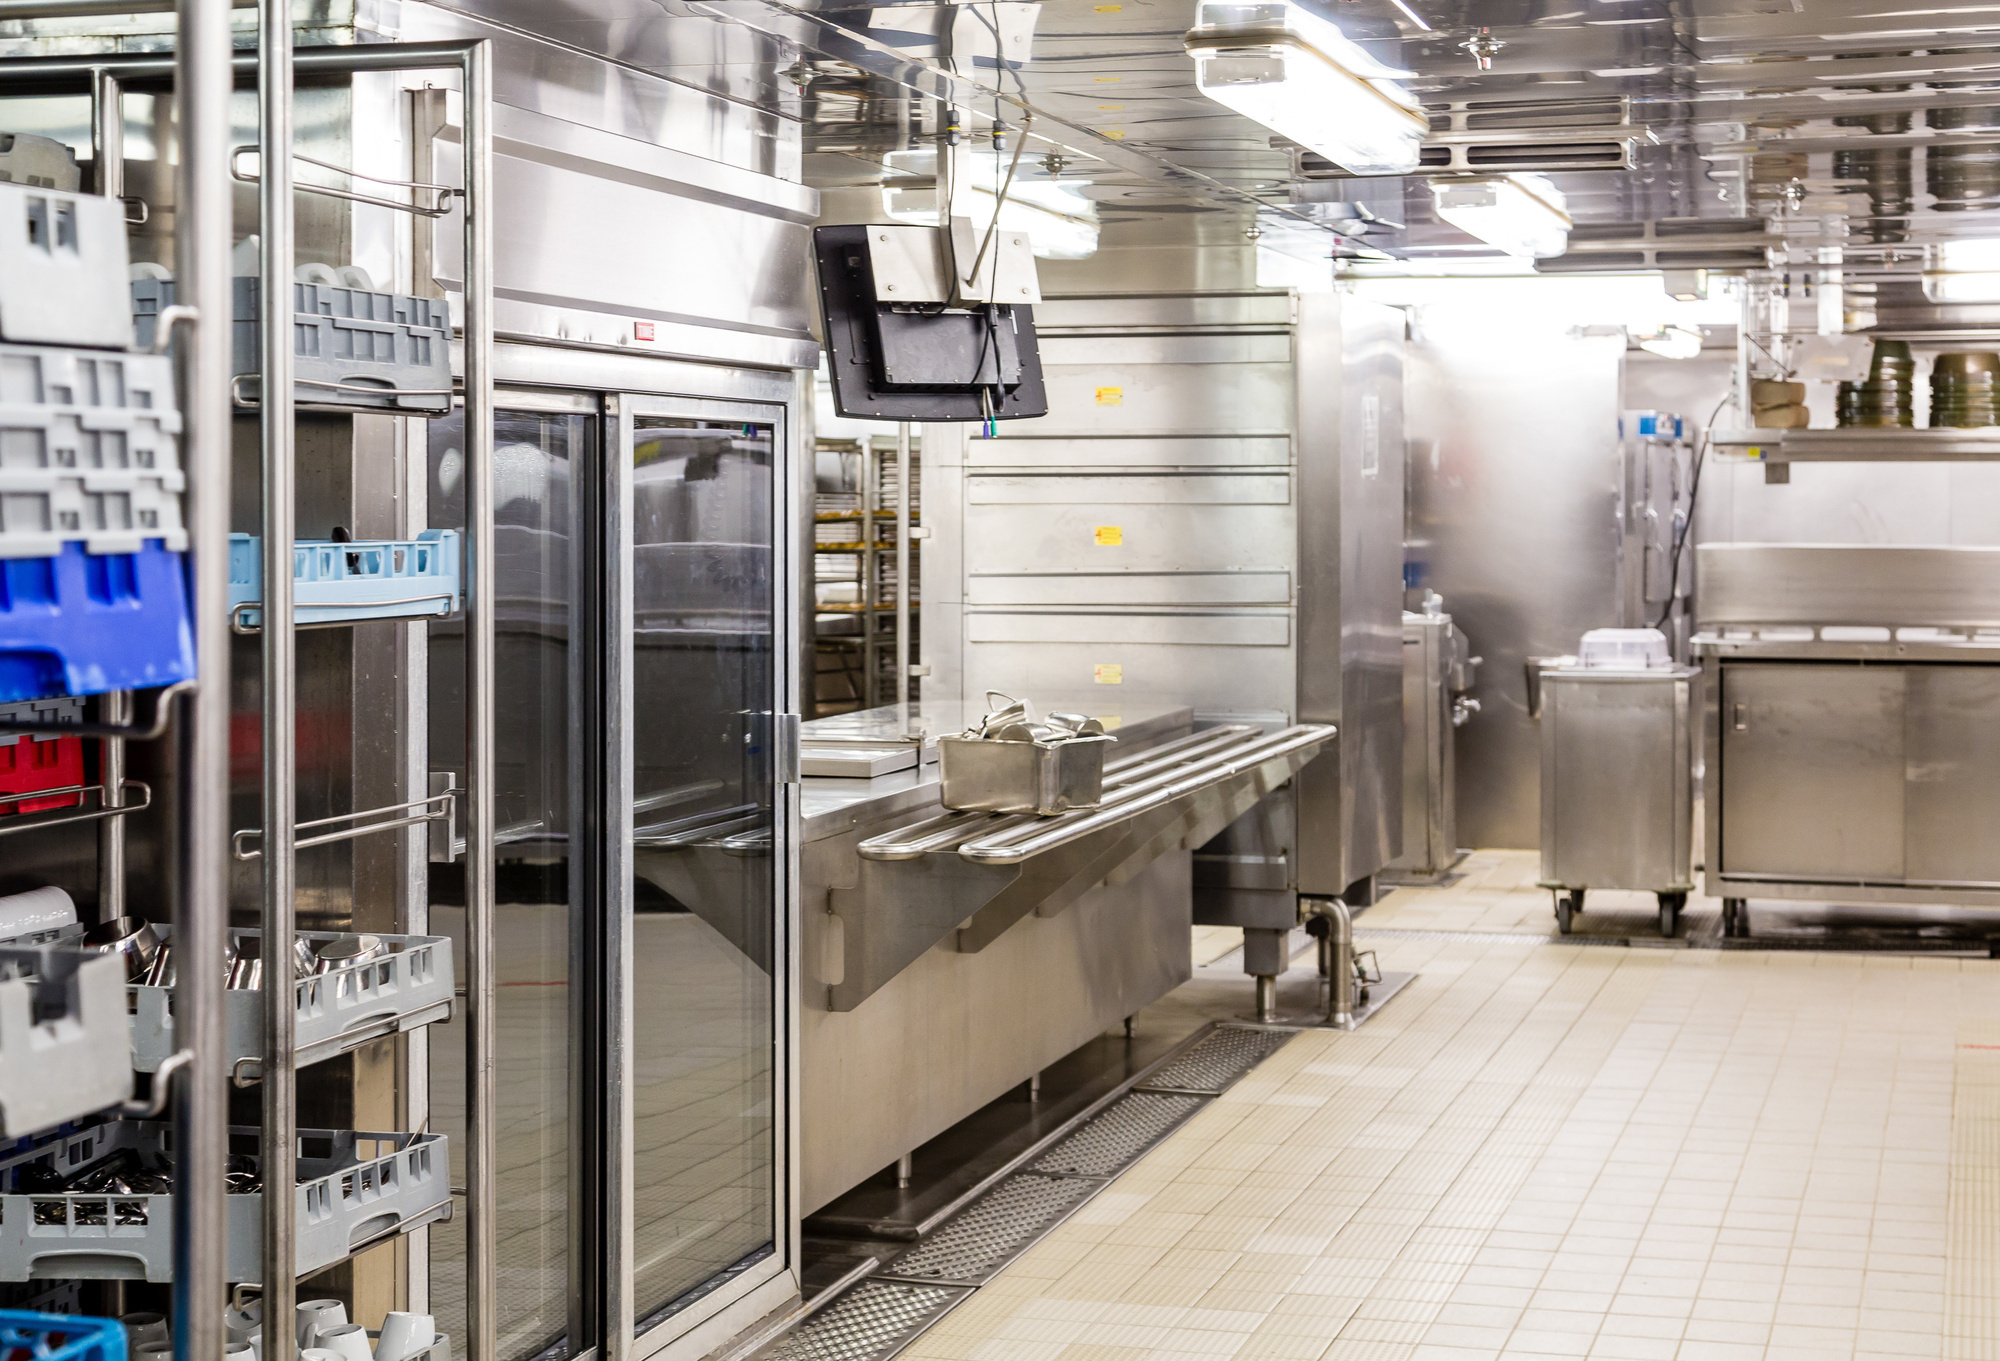 Refrigerator Temperature Measurement System for Restaurants - Zenatix